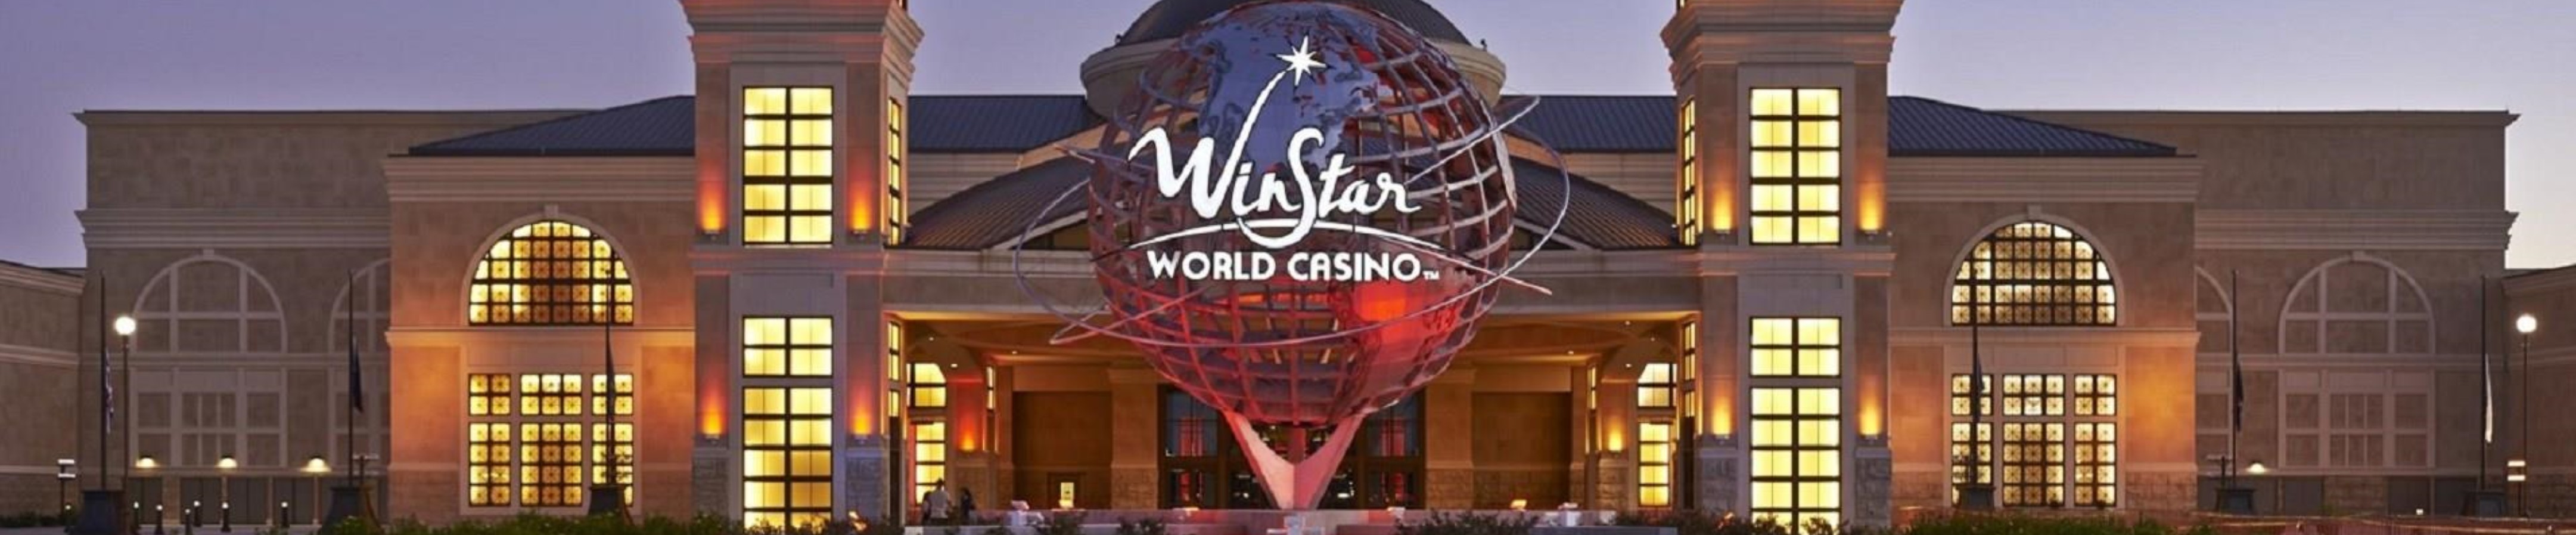 Winstar world casino oklahoma city casinos